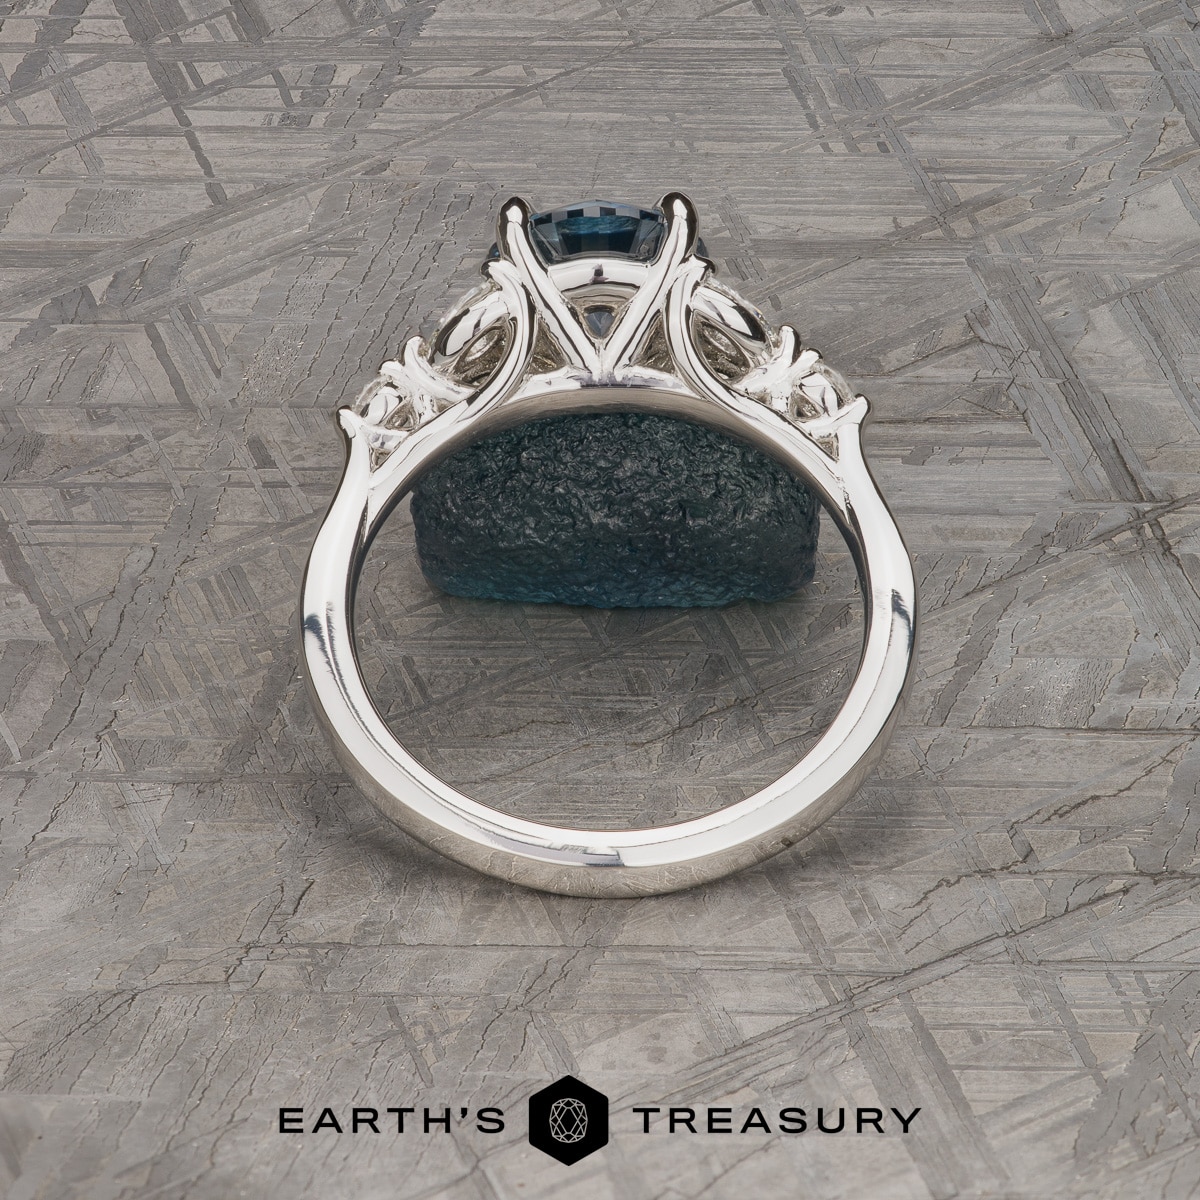 The "Cattleya" in platinum with 2.29-carat Montana sapphire